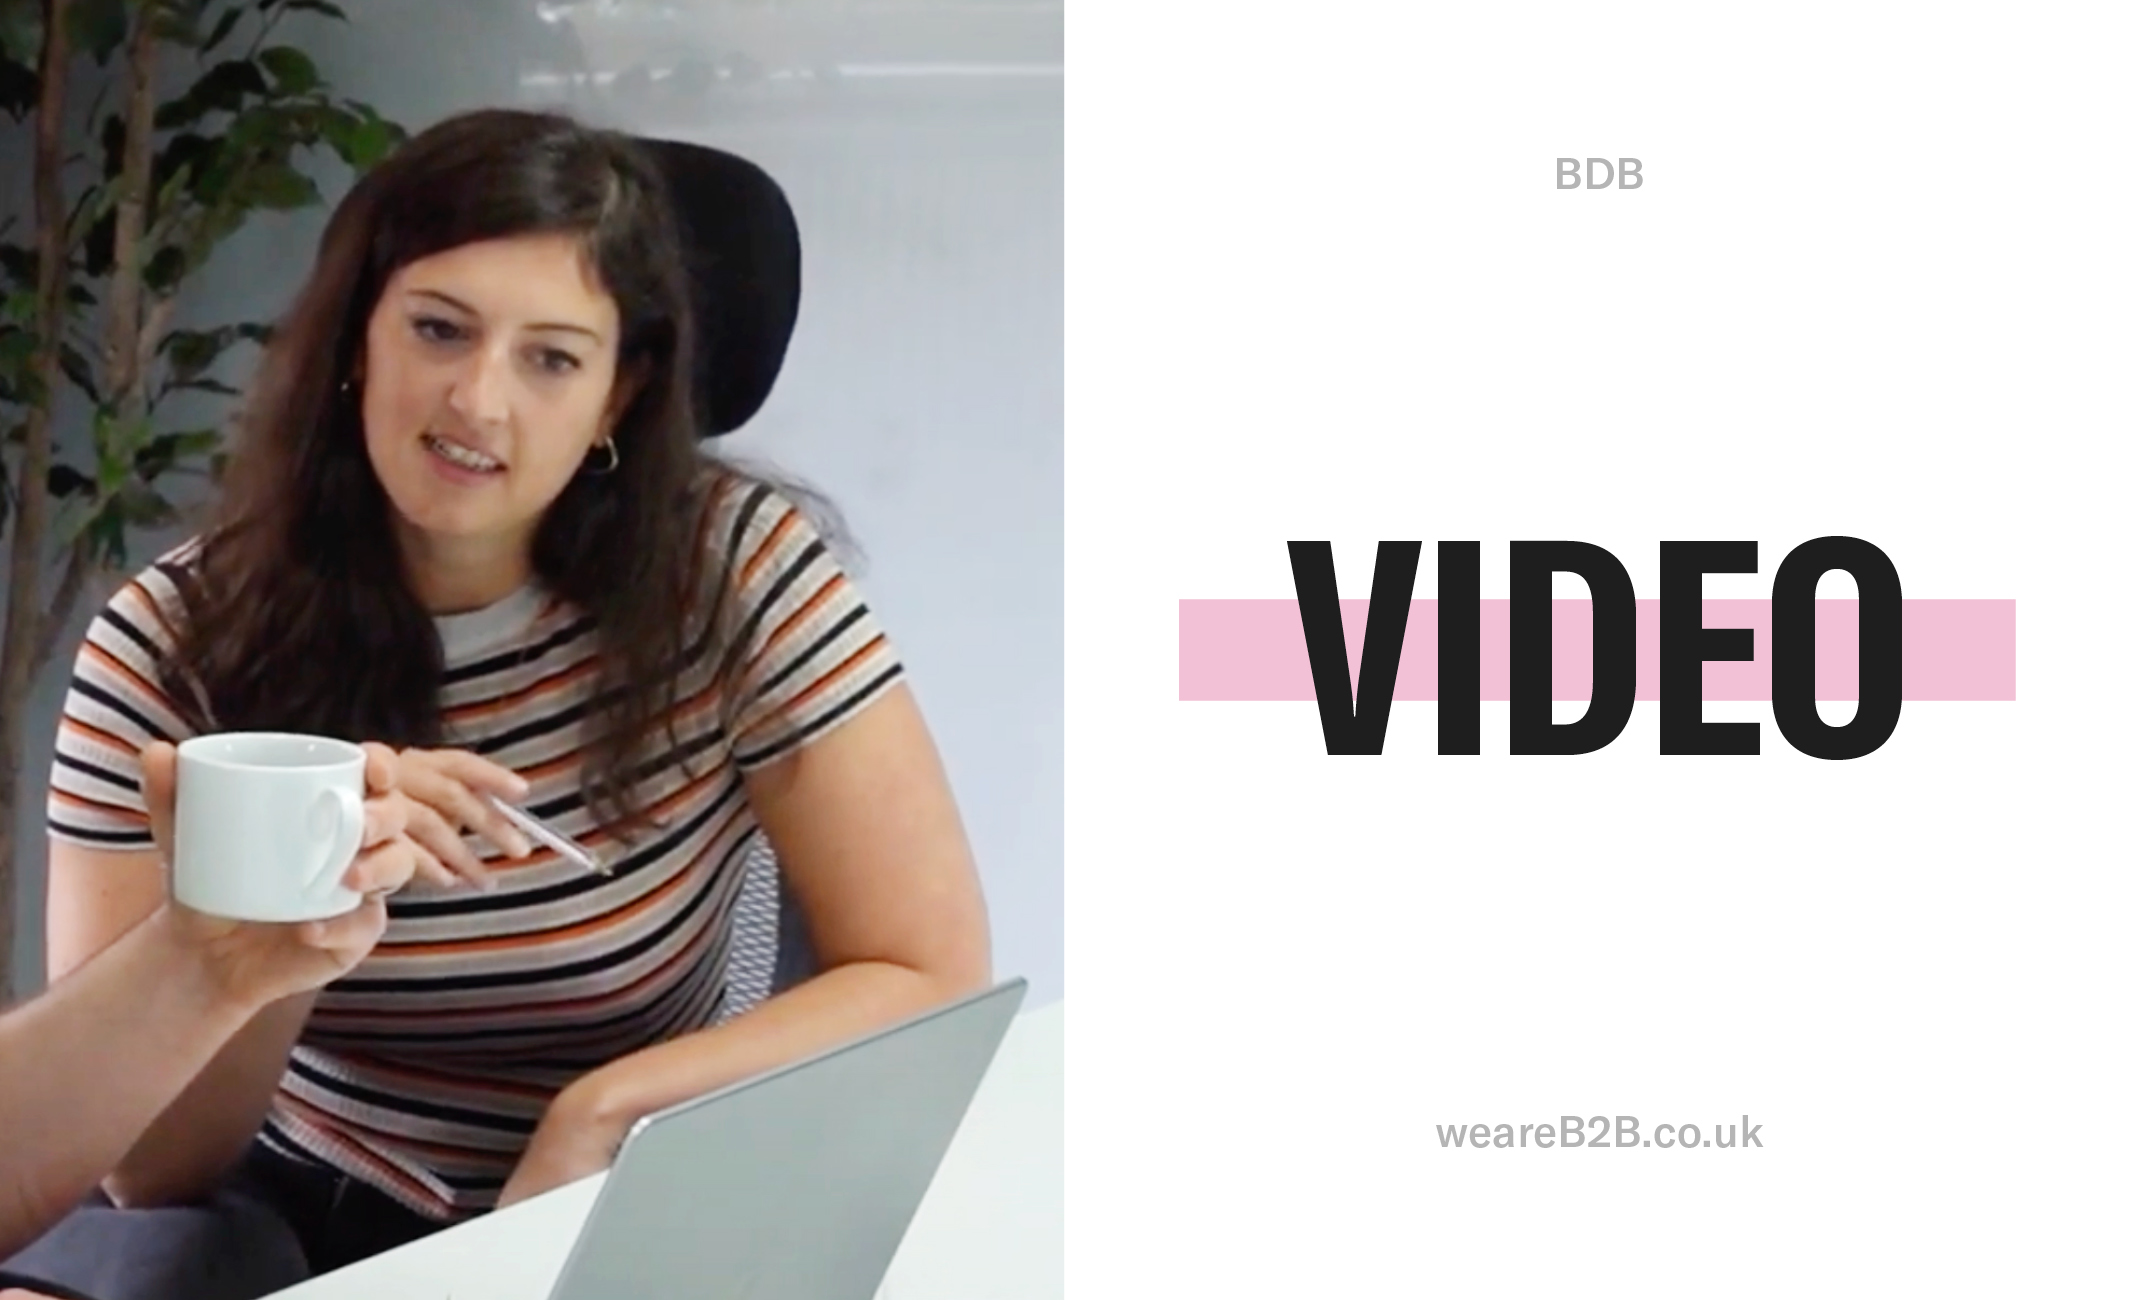 video about bdb careers - sara houghton